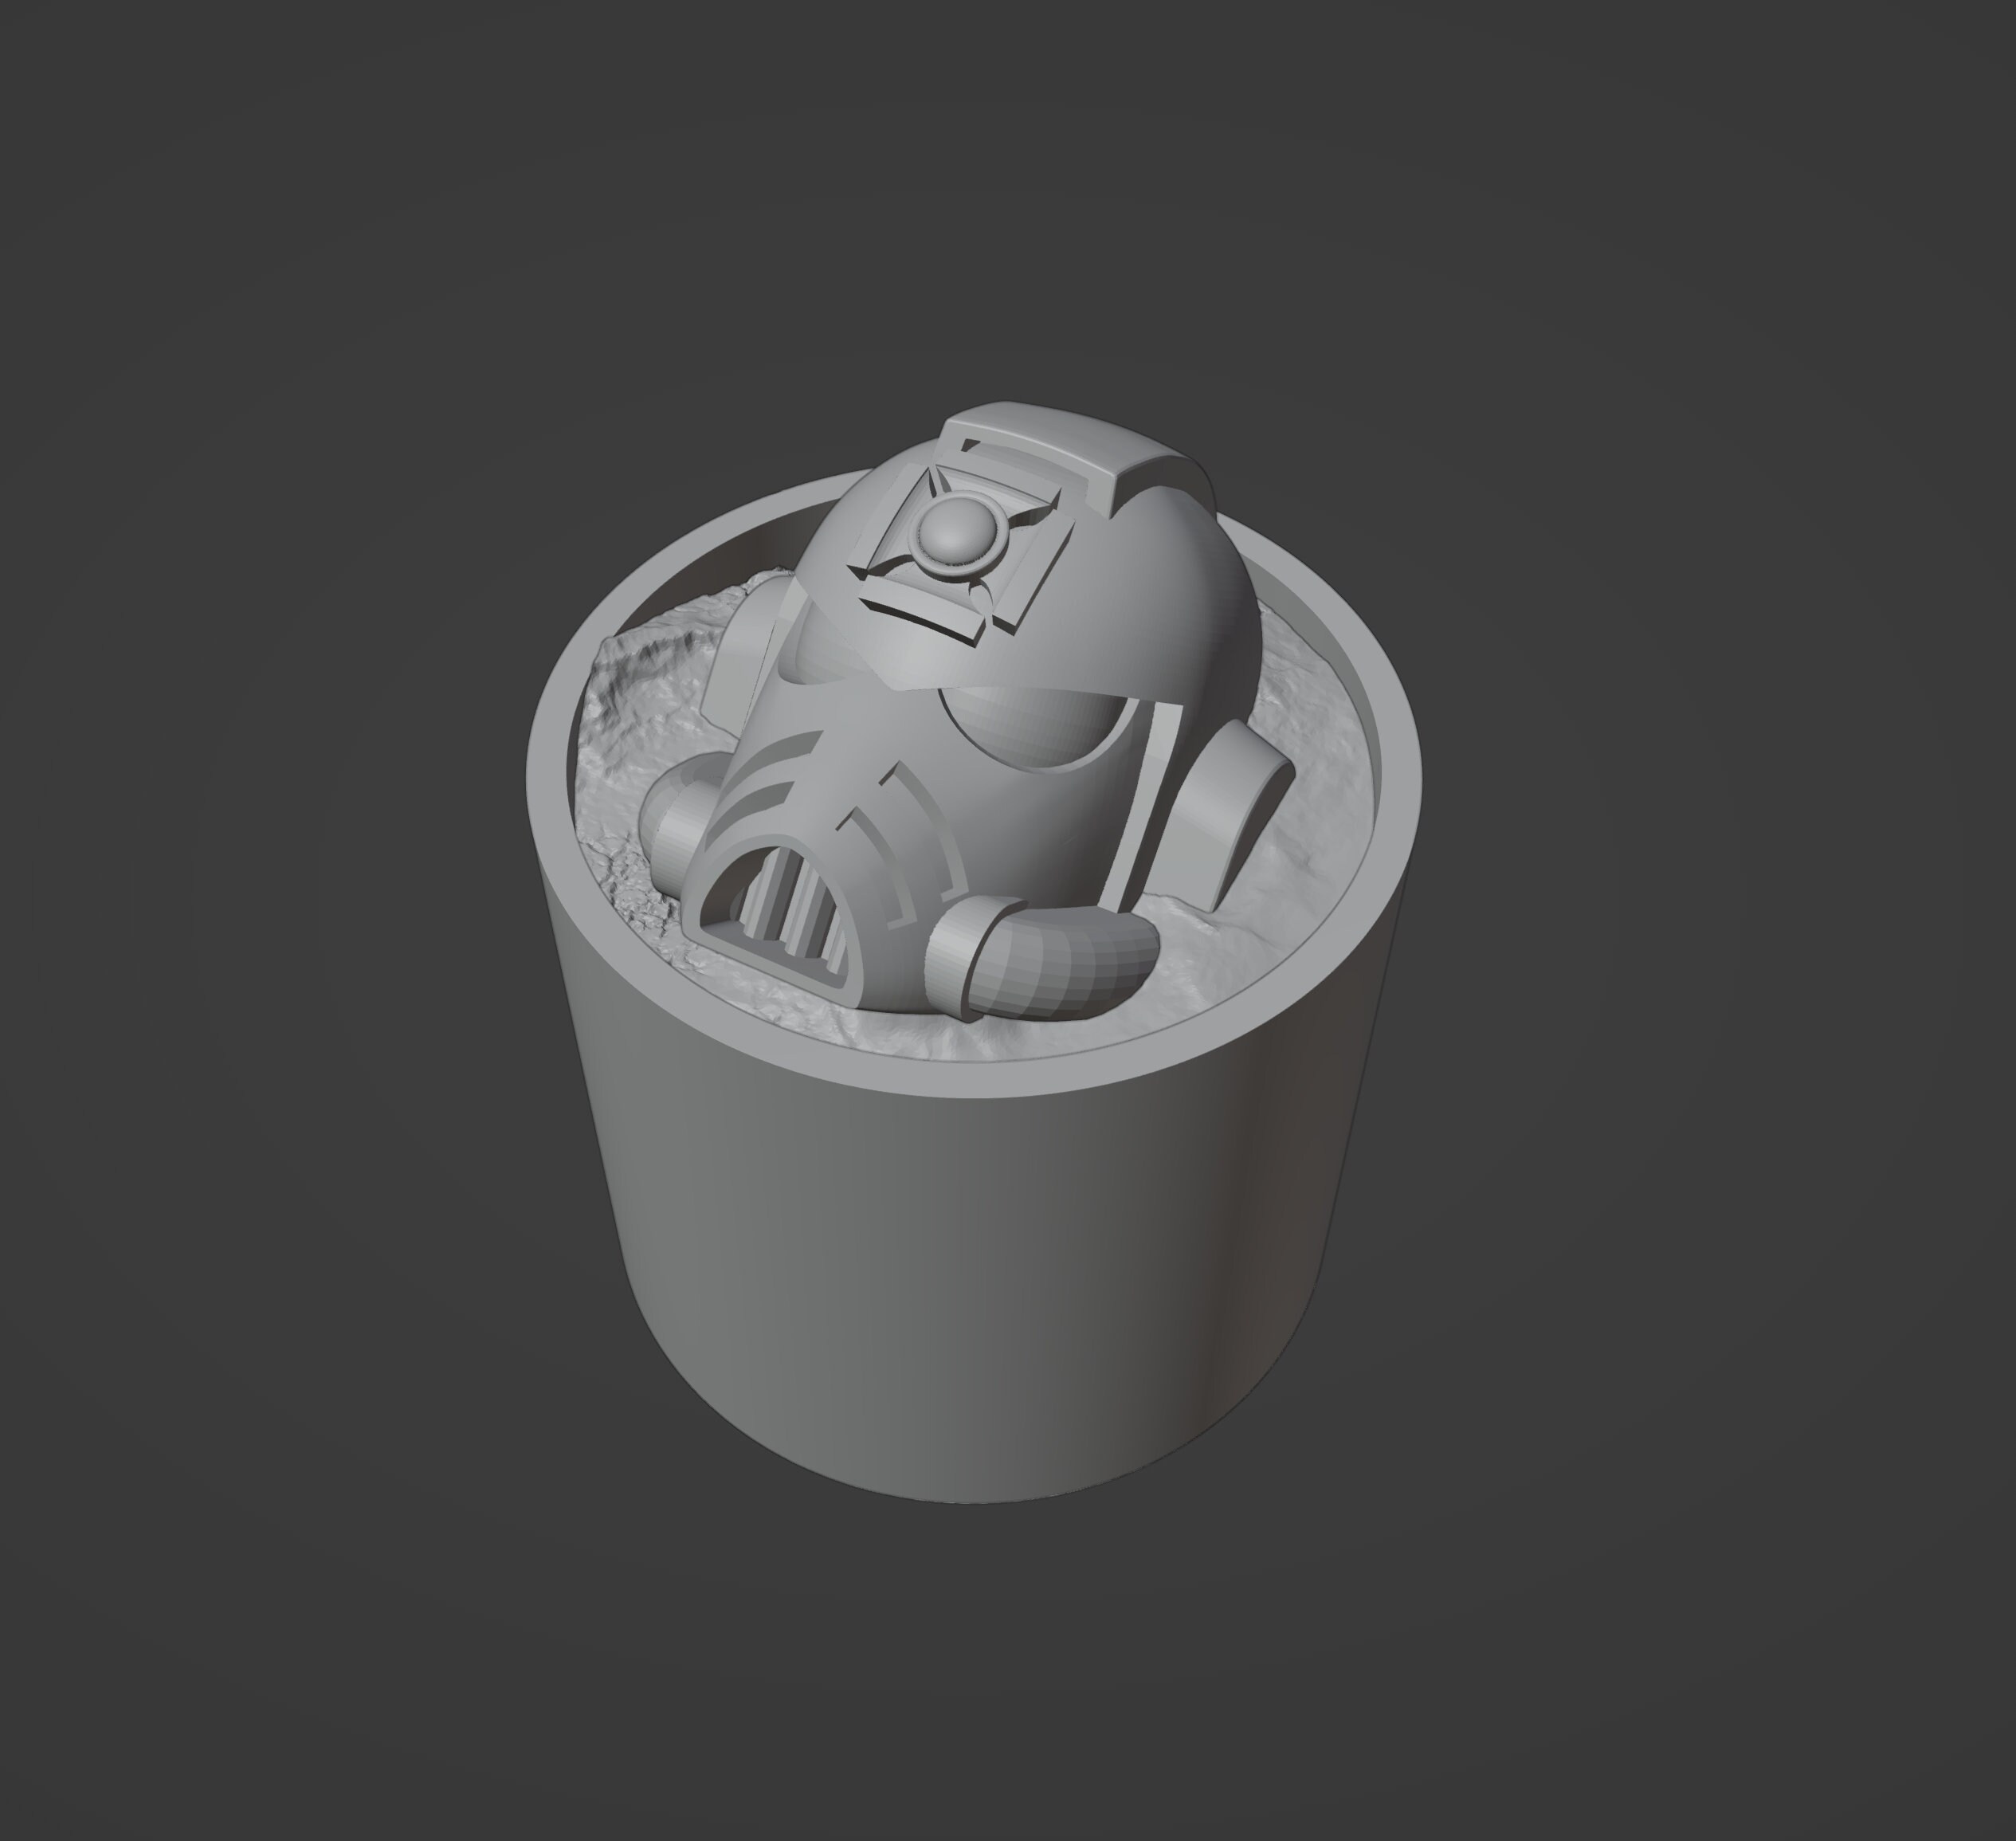 3D Printable Paint Pot Swatch Caps by Custom Miniature Maker